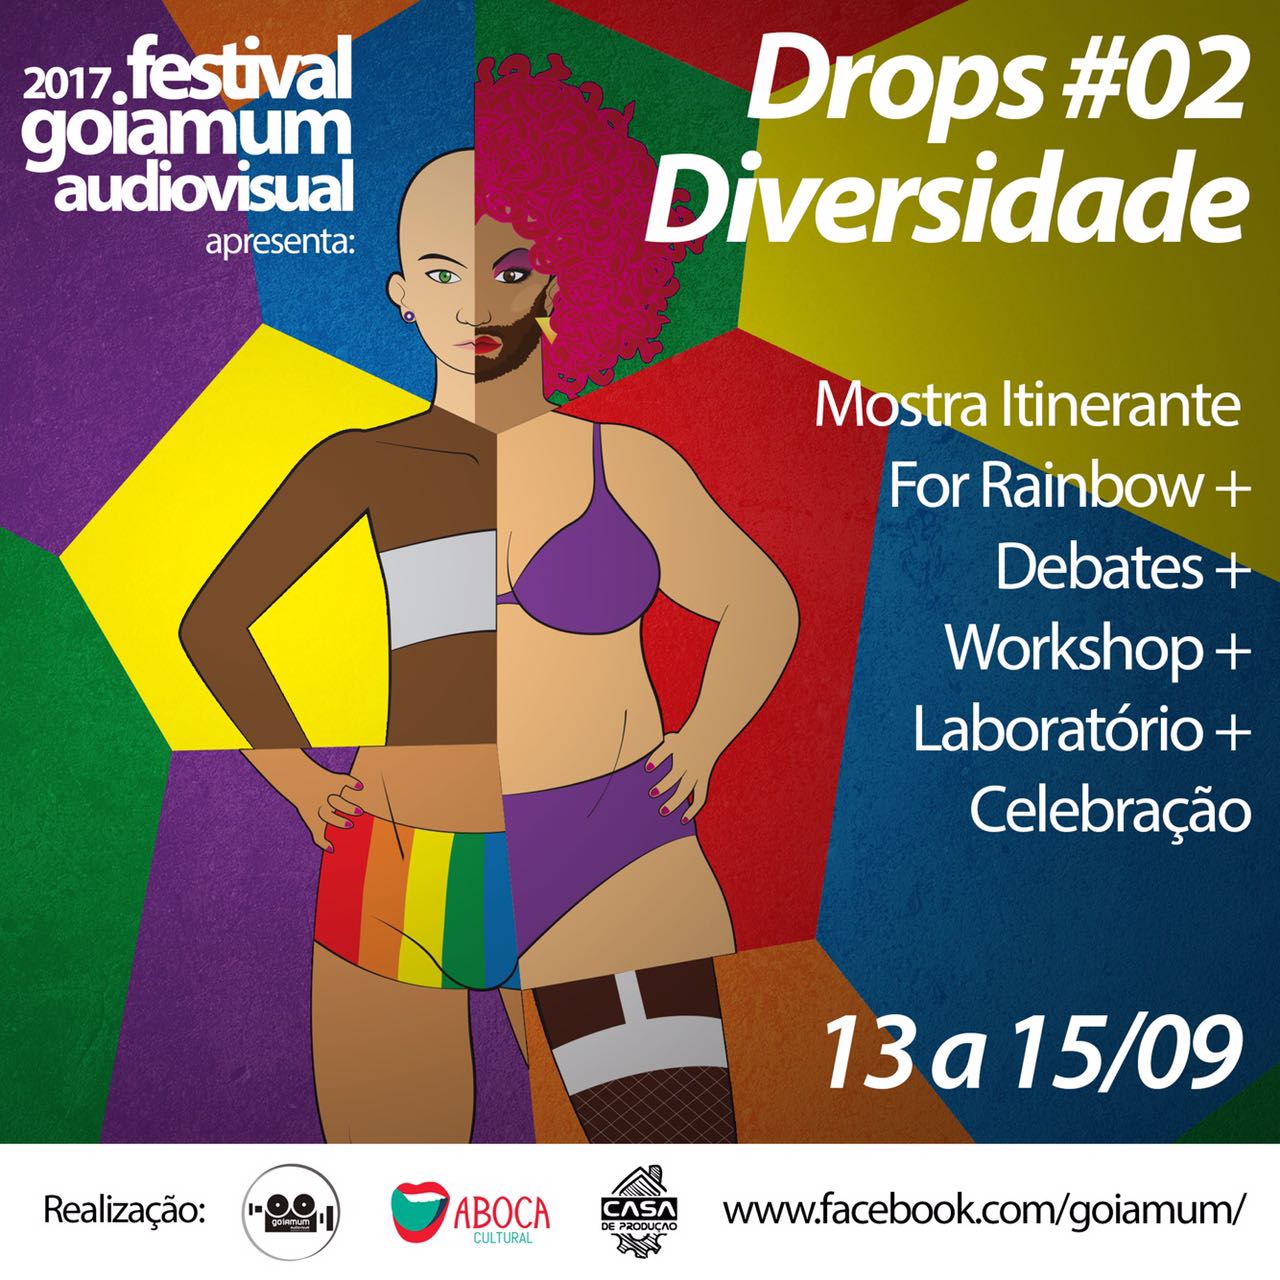 Festival Goiamum Audiovisual apresenta Drops#02 - Diversidade